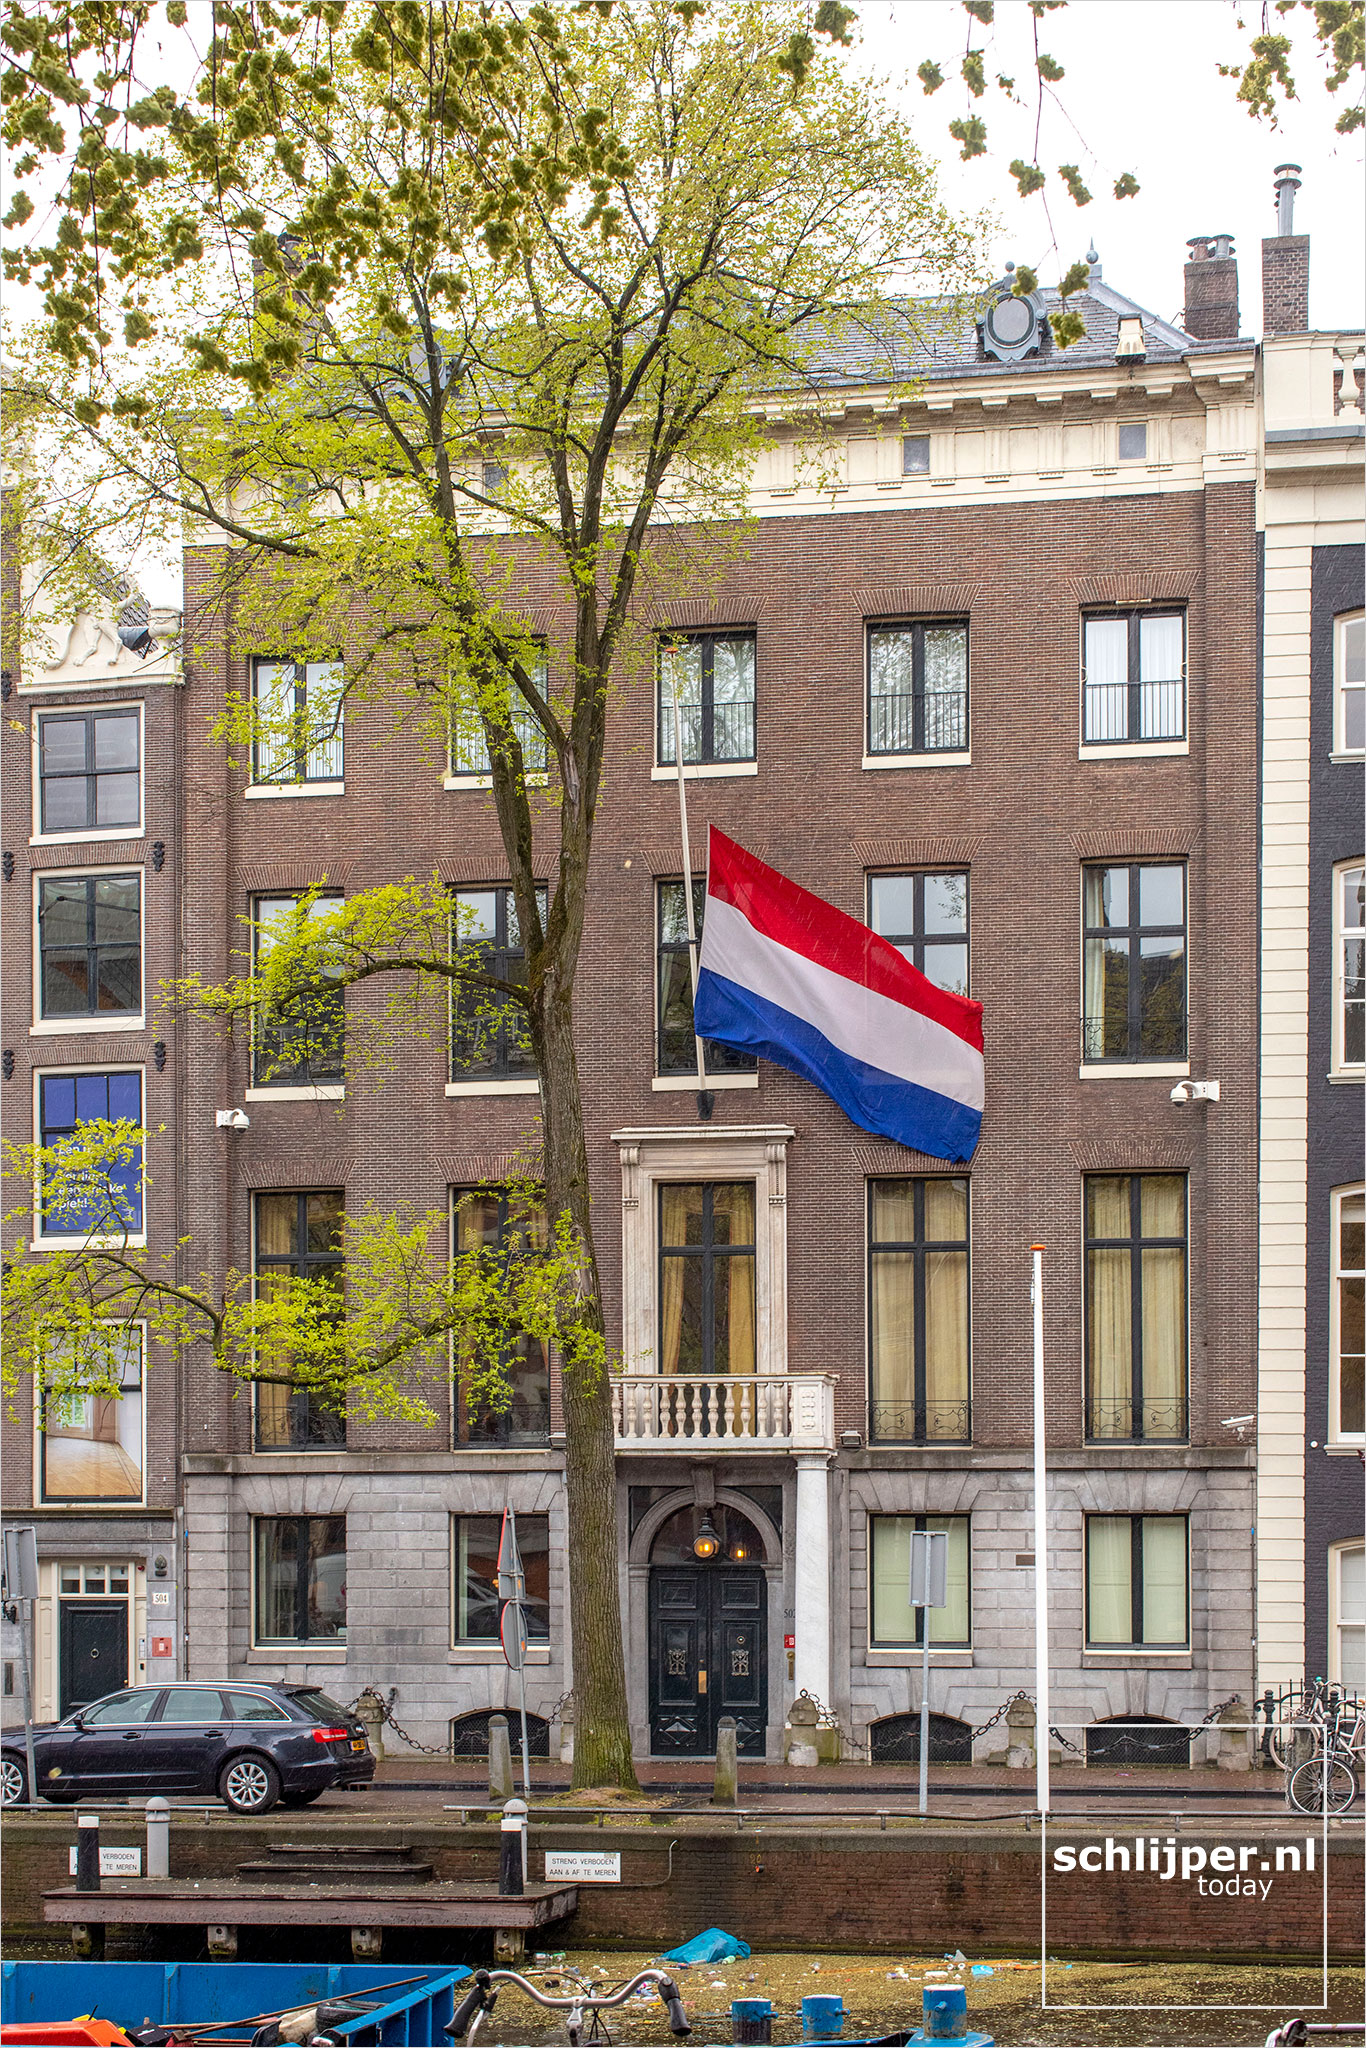 The Netherlands, Amsterdam, 4 mei 2021